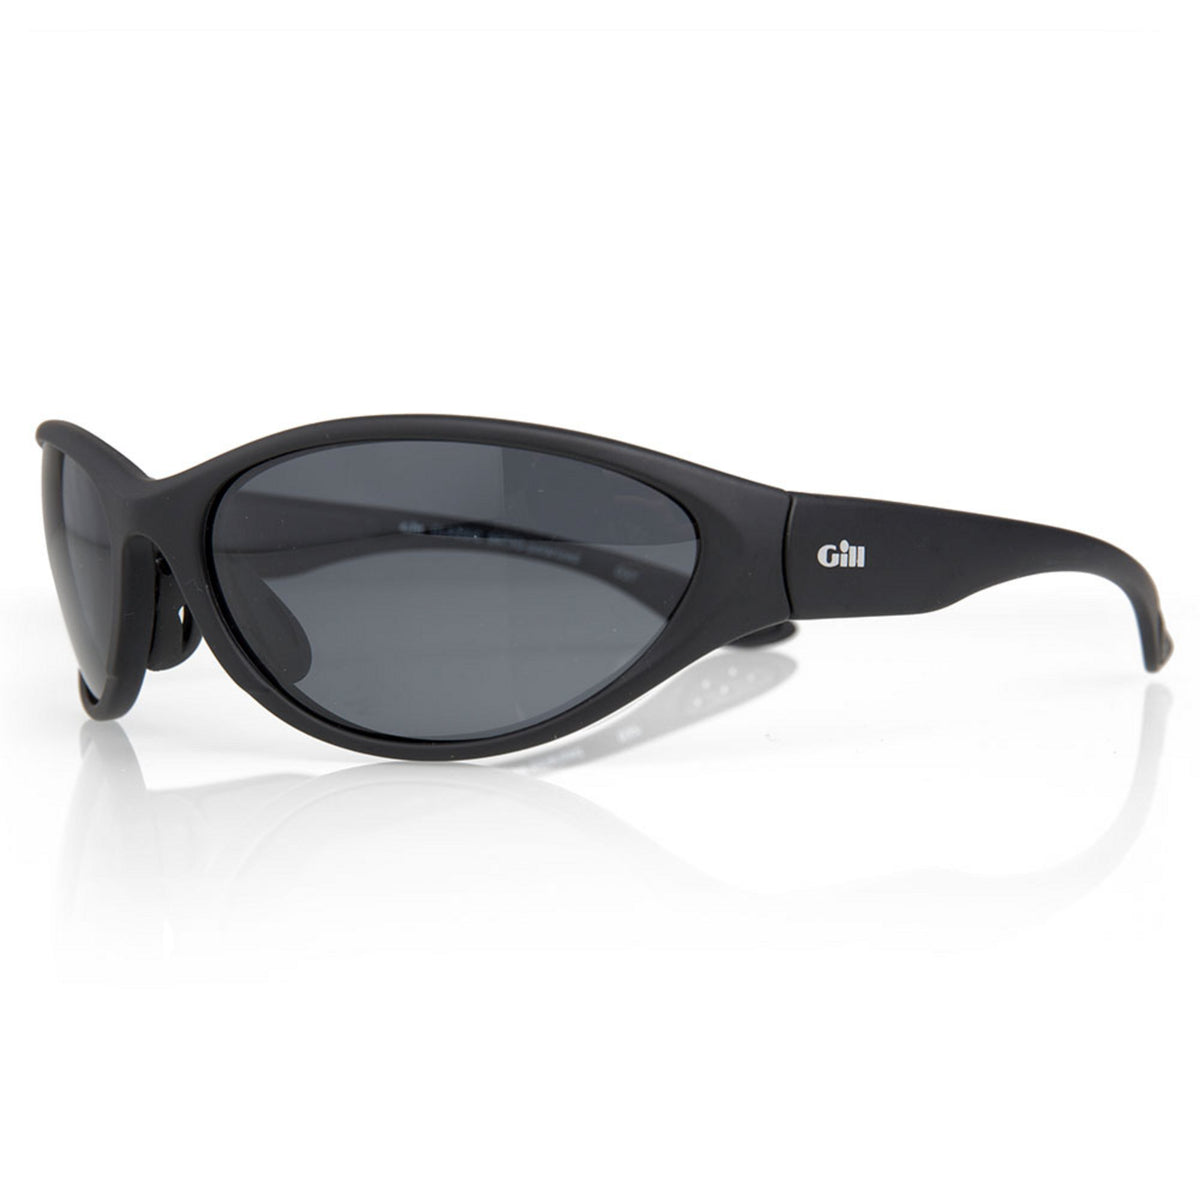 GILL Classic Sunglasses - One Size